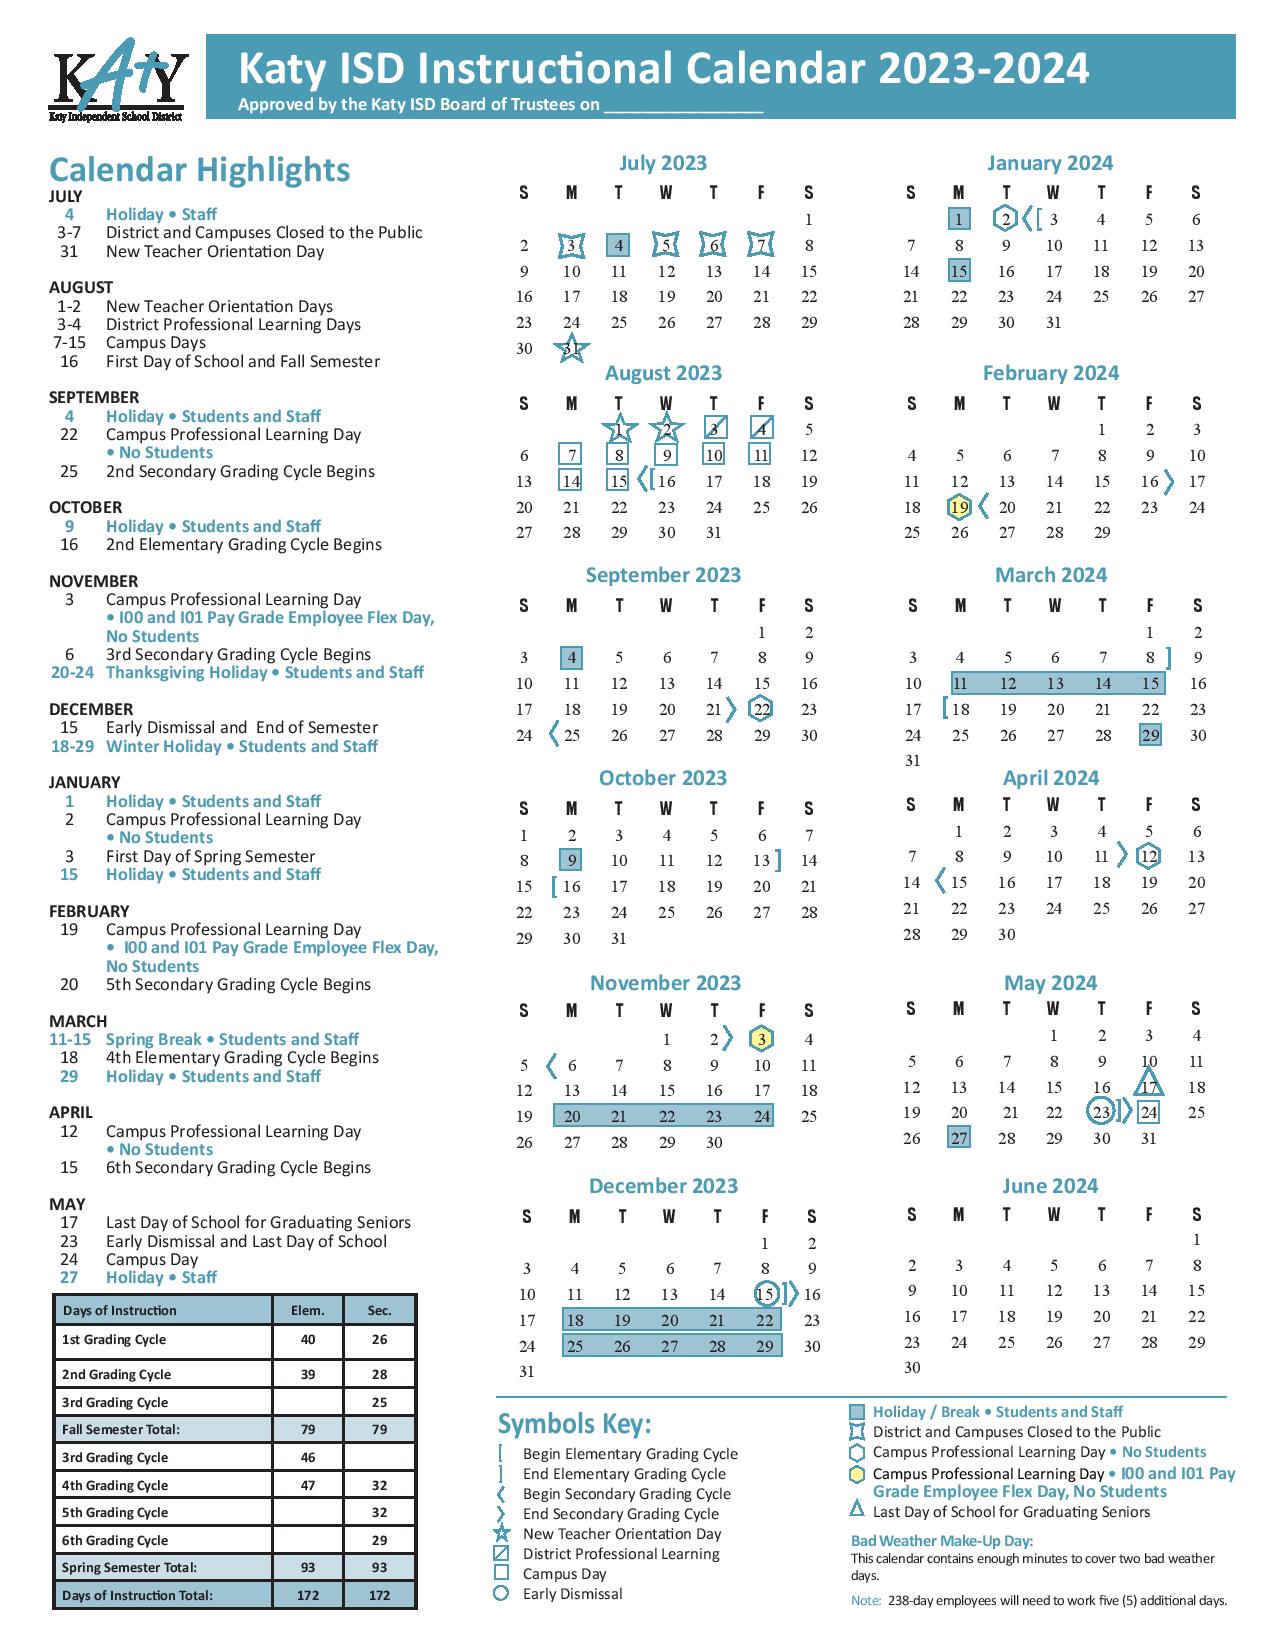 Klein ISD approves calendar for 2023-24 school year